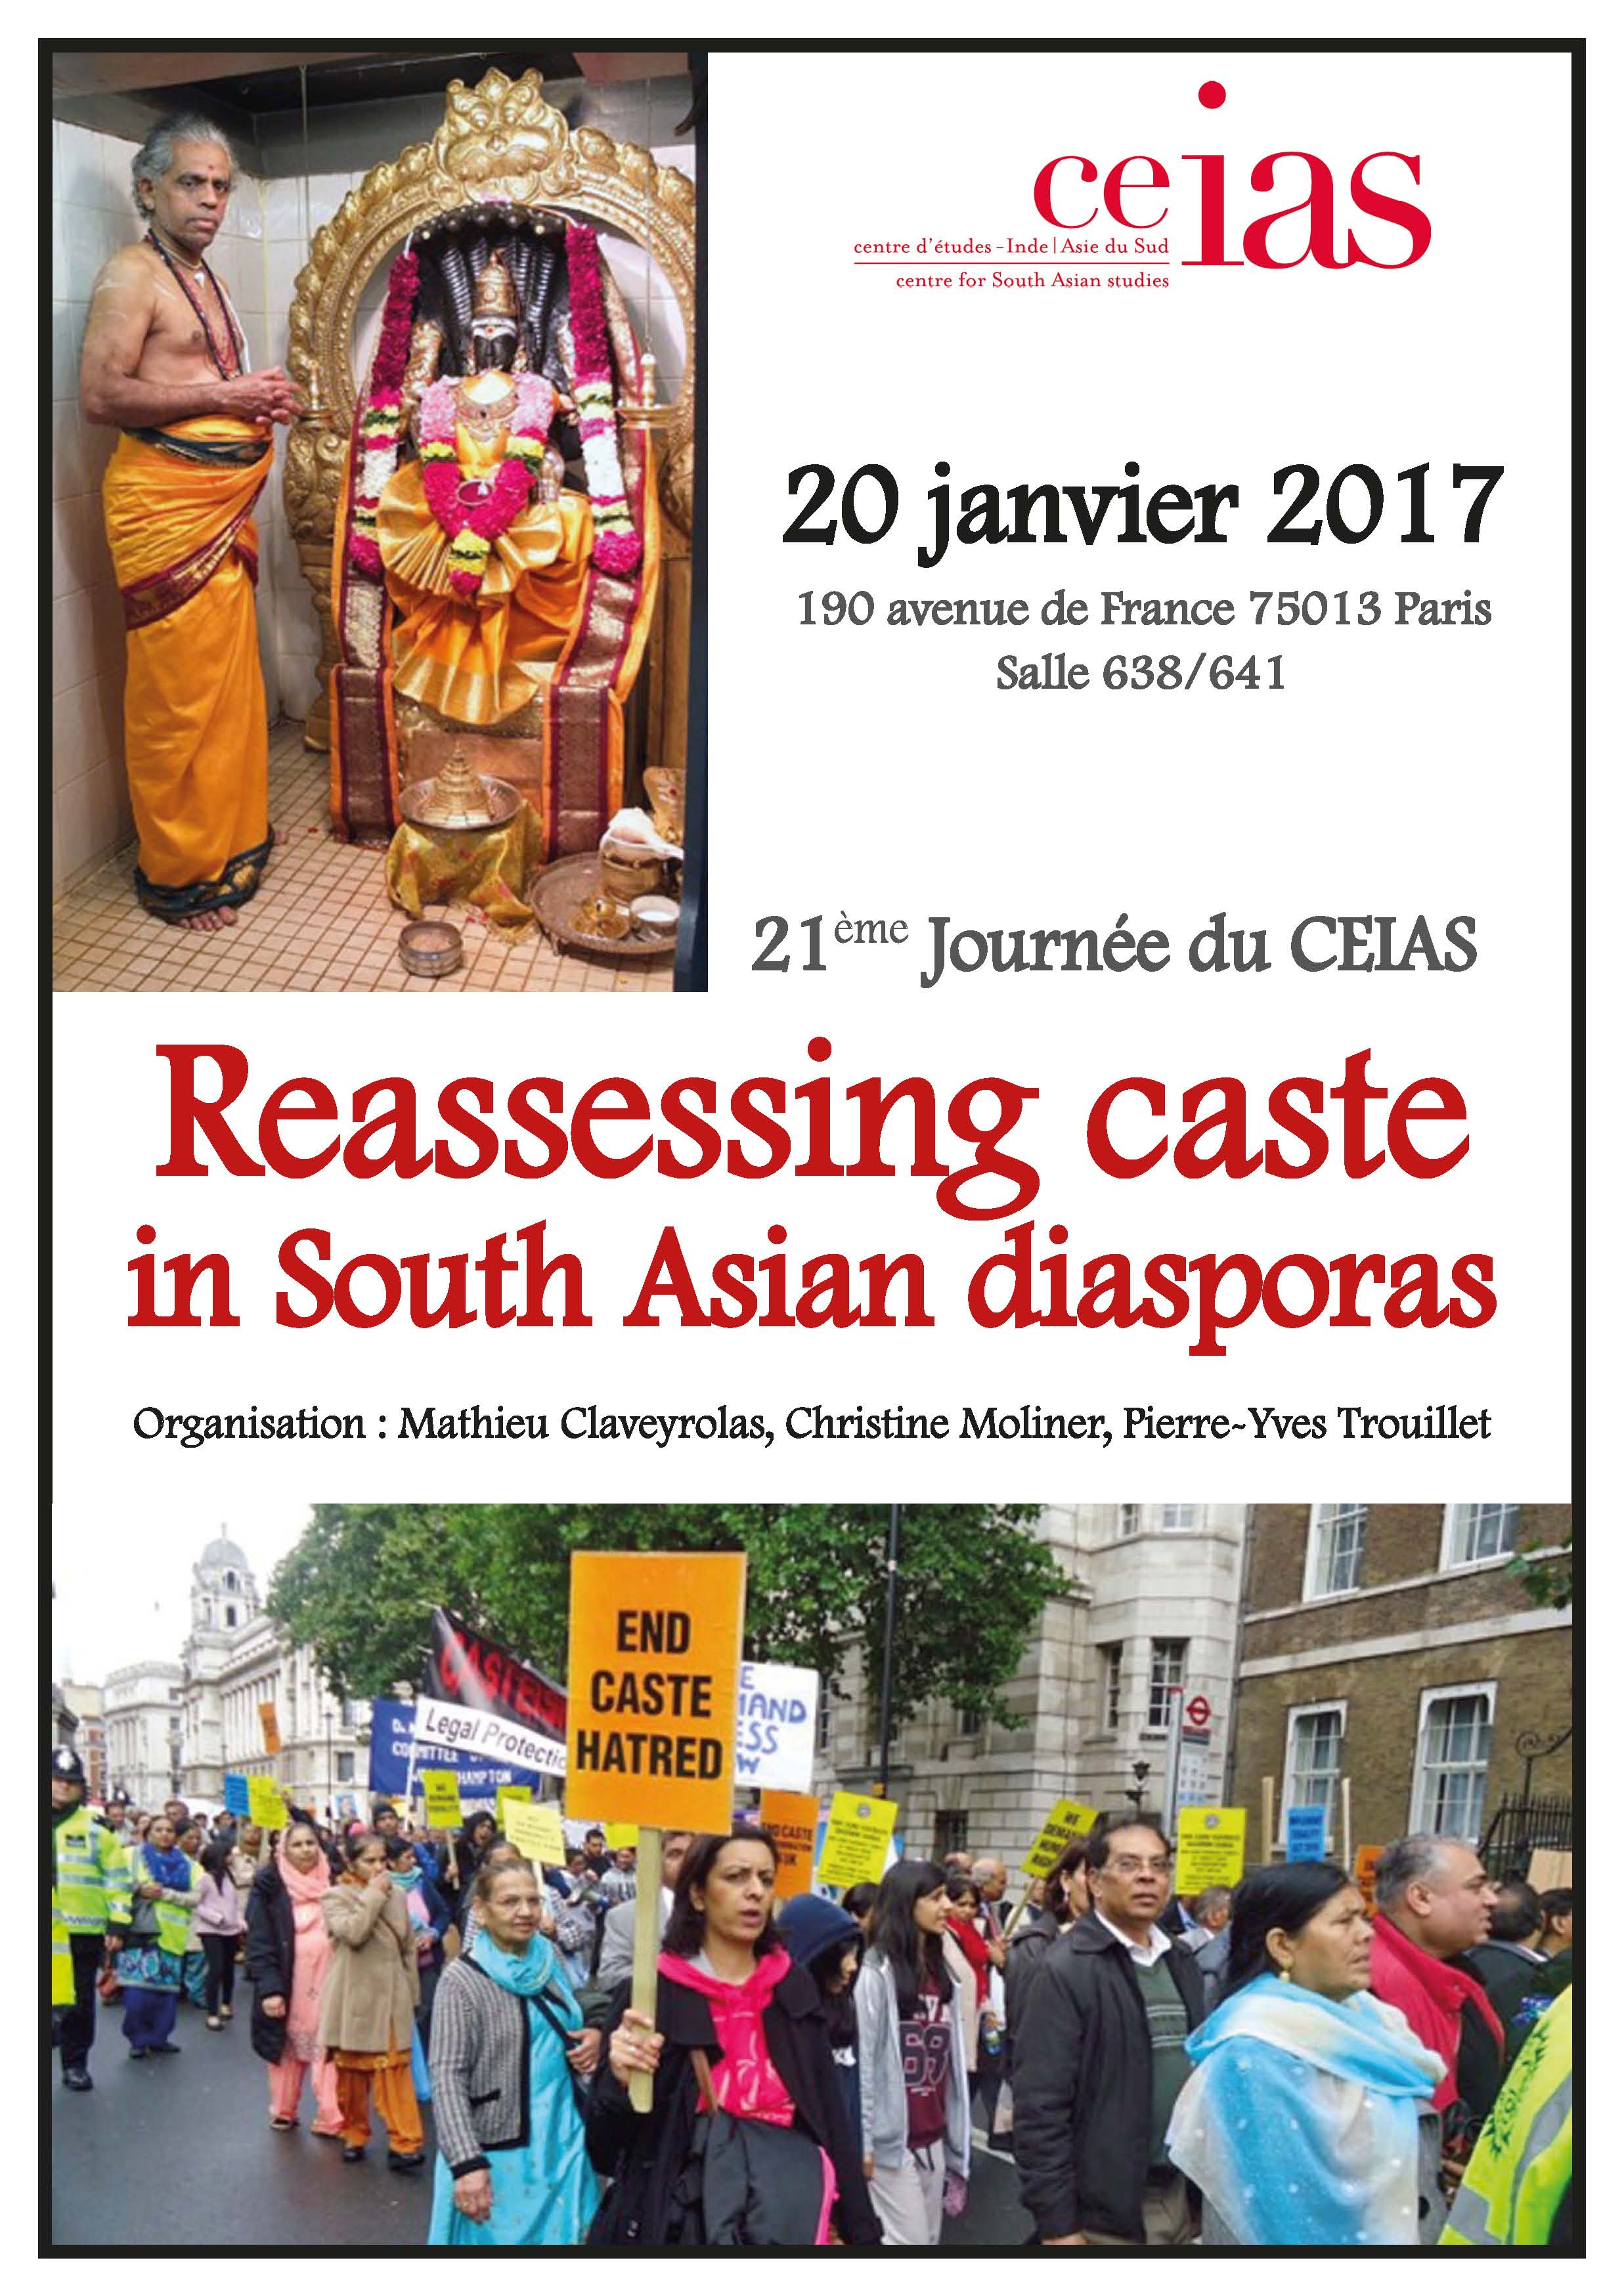 Reassessing caste in South Asian diasporas